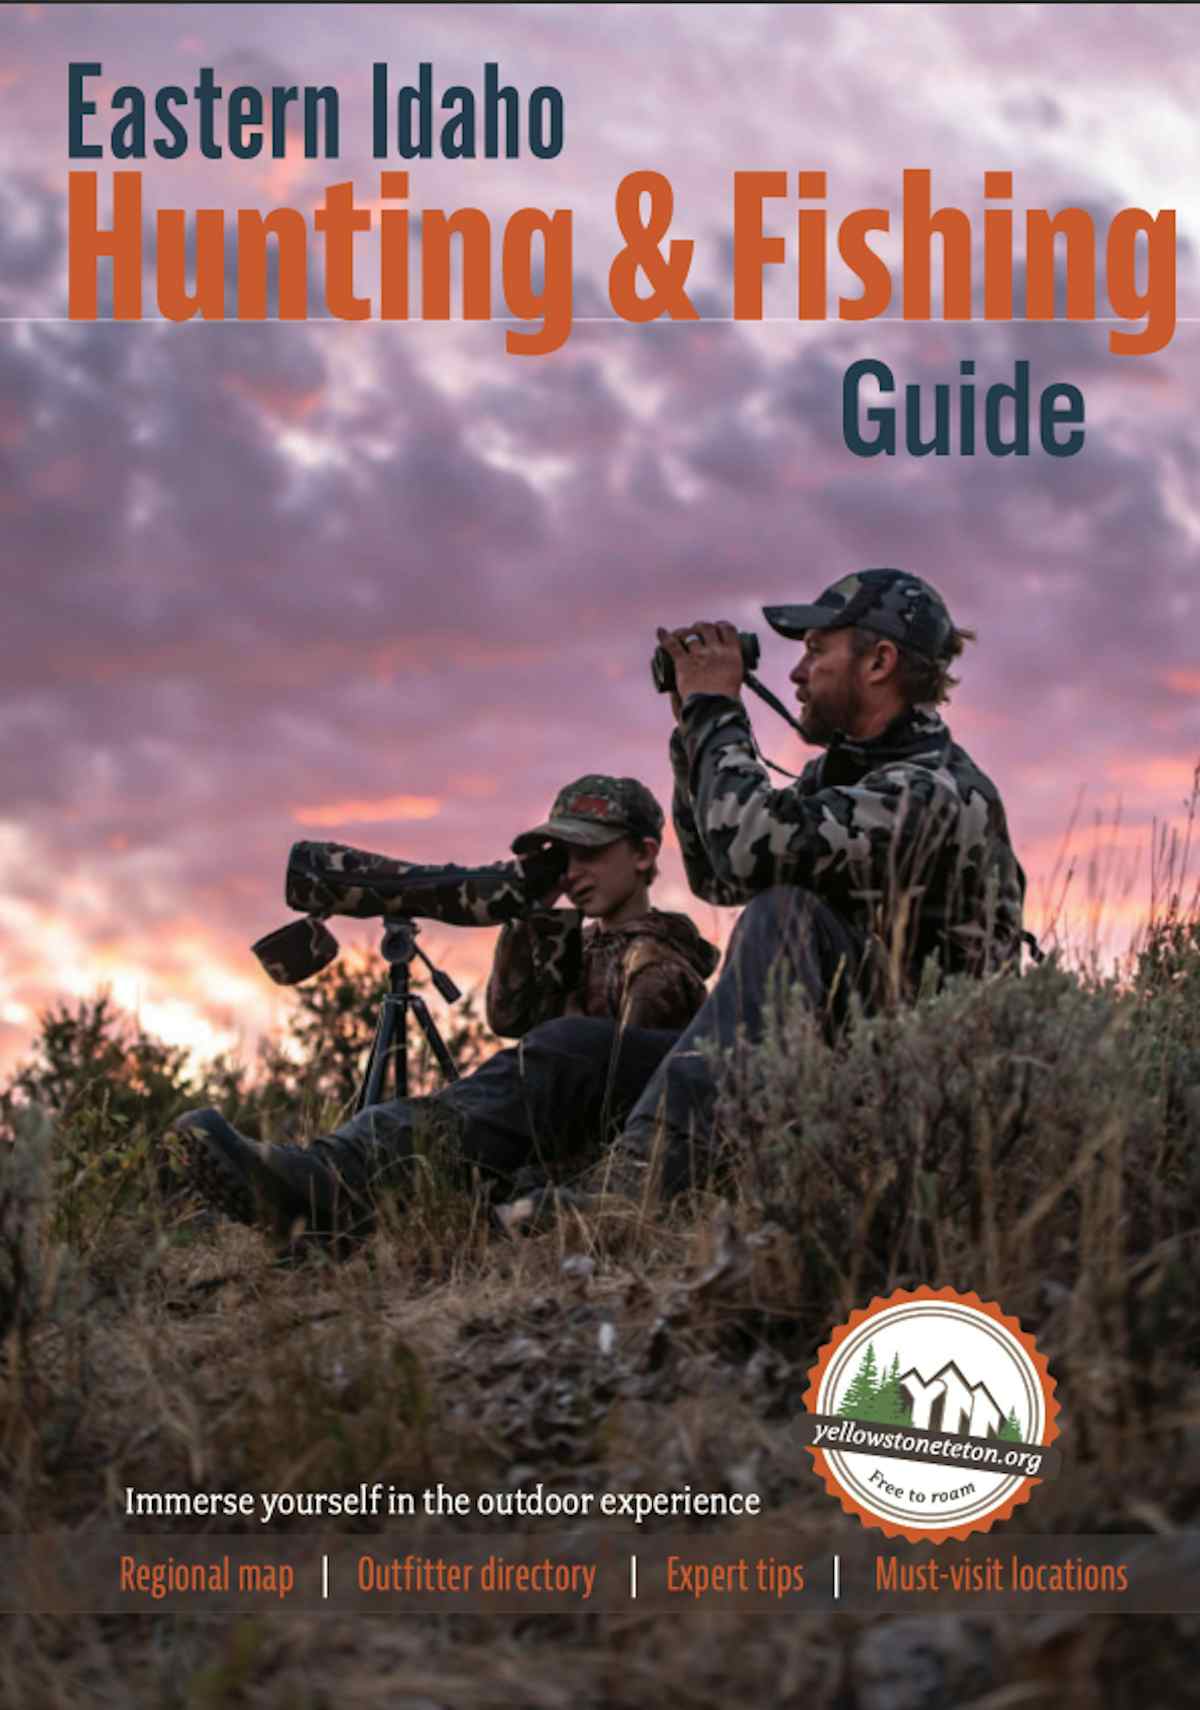 The Eastern Idaho Hunting  Fishing Guide for Yellowstone Teton Territory.